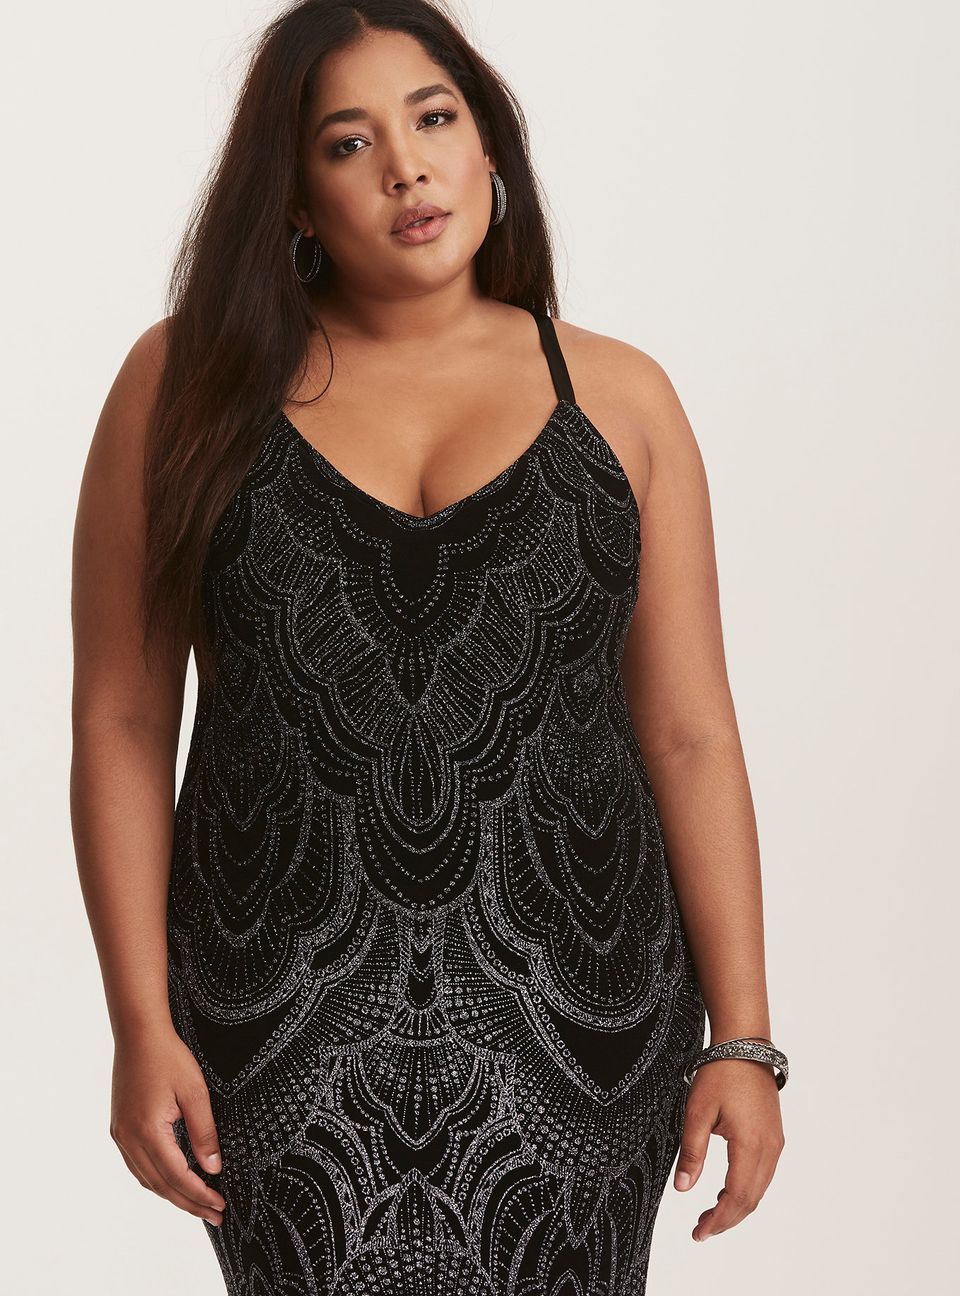 TORRID : Black Glitter Design Maxi Dress  Gowns dresses, Plus size dresses,  Maxi dress